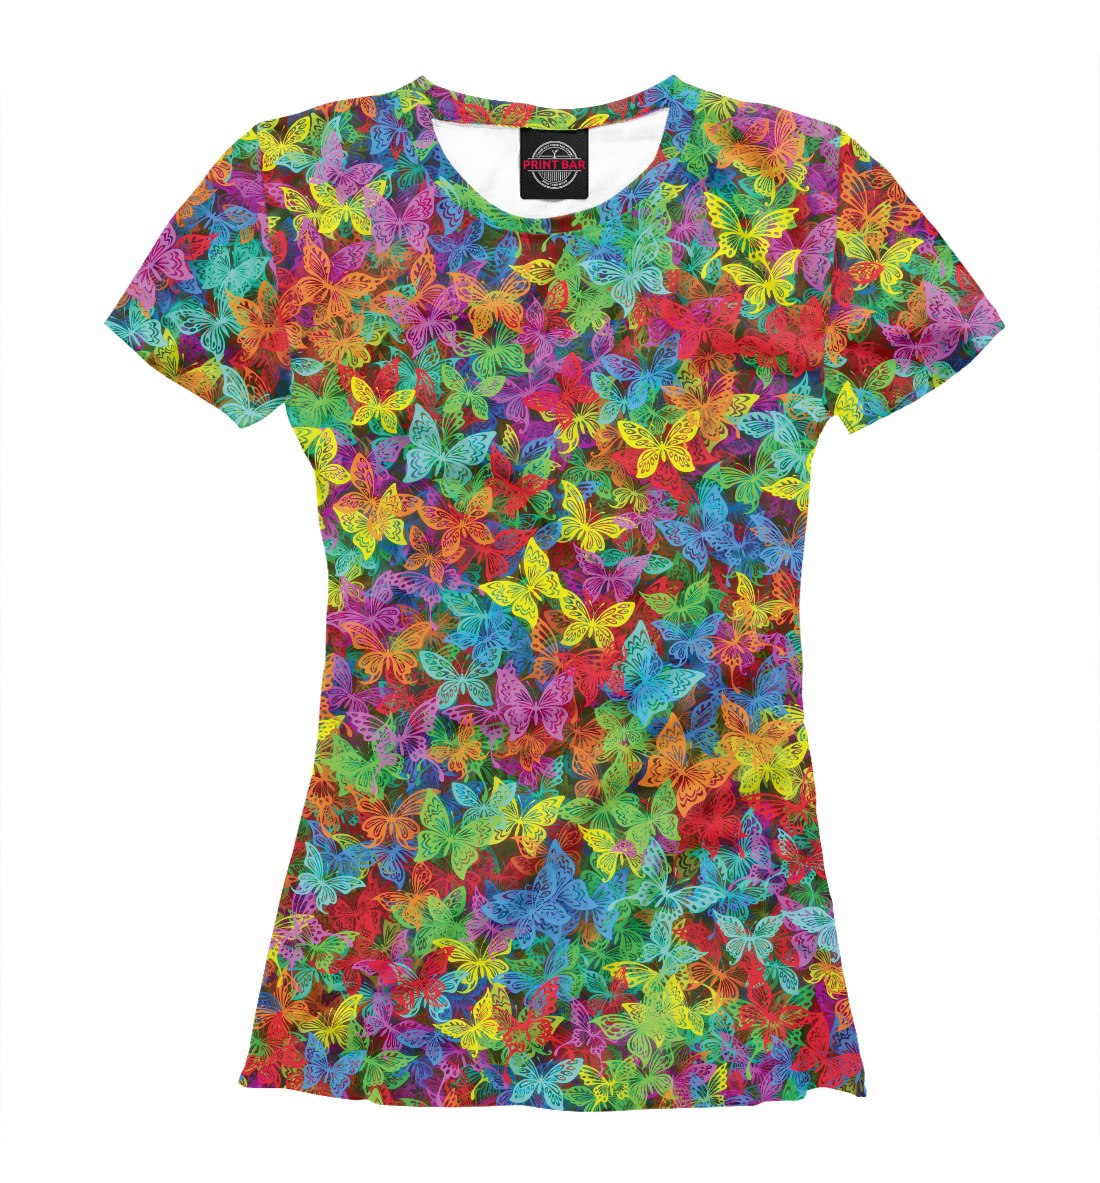 Цветная майка. Цветные футболки. Многоцветная футболка. Цветные футболки женские. Яркая разноцветная футболка.